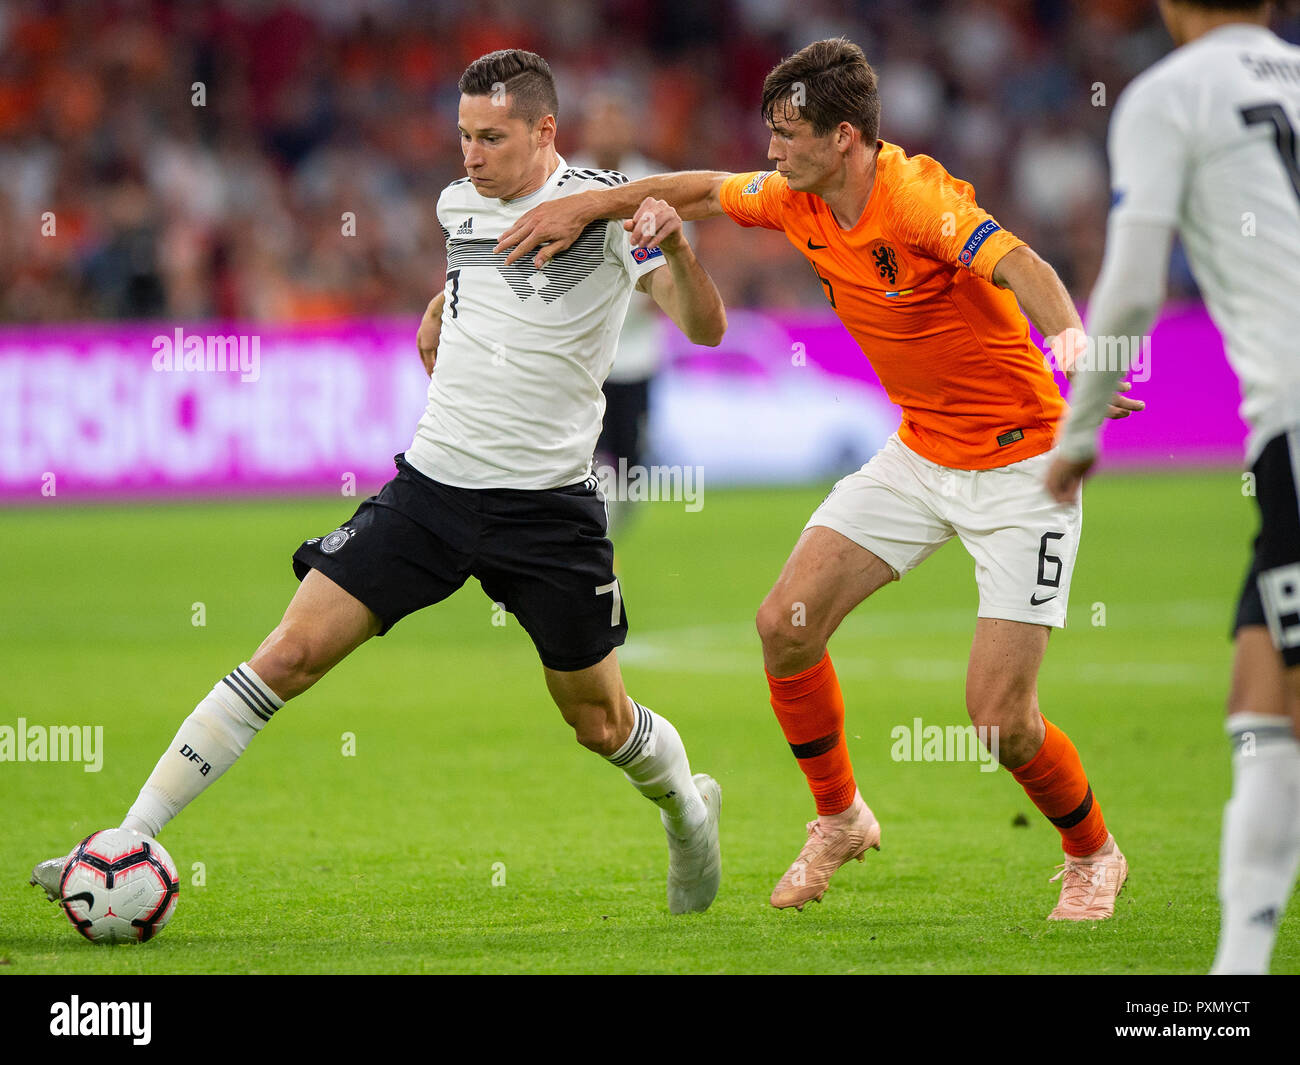 13-10-2018: Voetbal: Nederland v Duitsland: Amsterdam UEFA Nations League 2019 Julian Draxler of Germany, Marten de Roon of The Netherlands Stock Photo